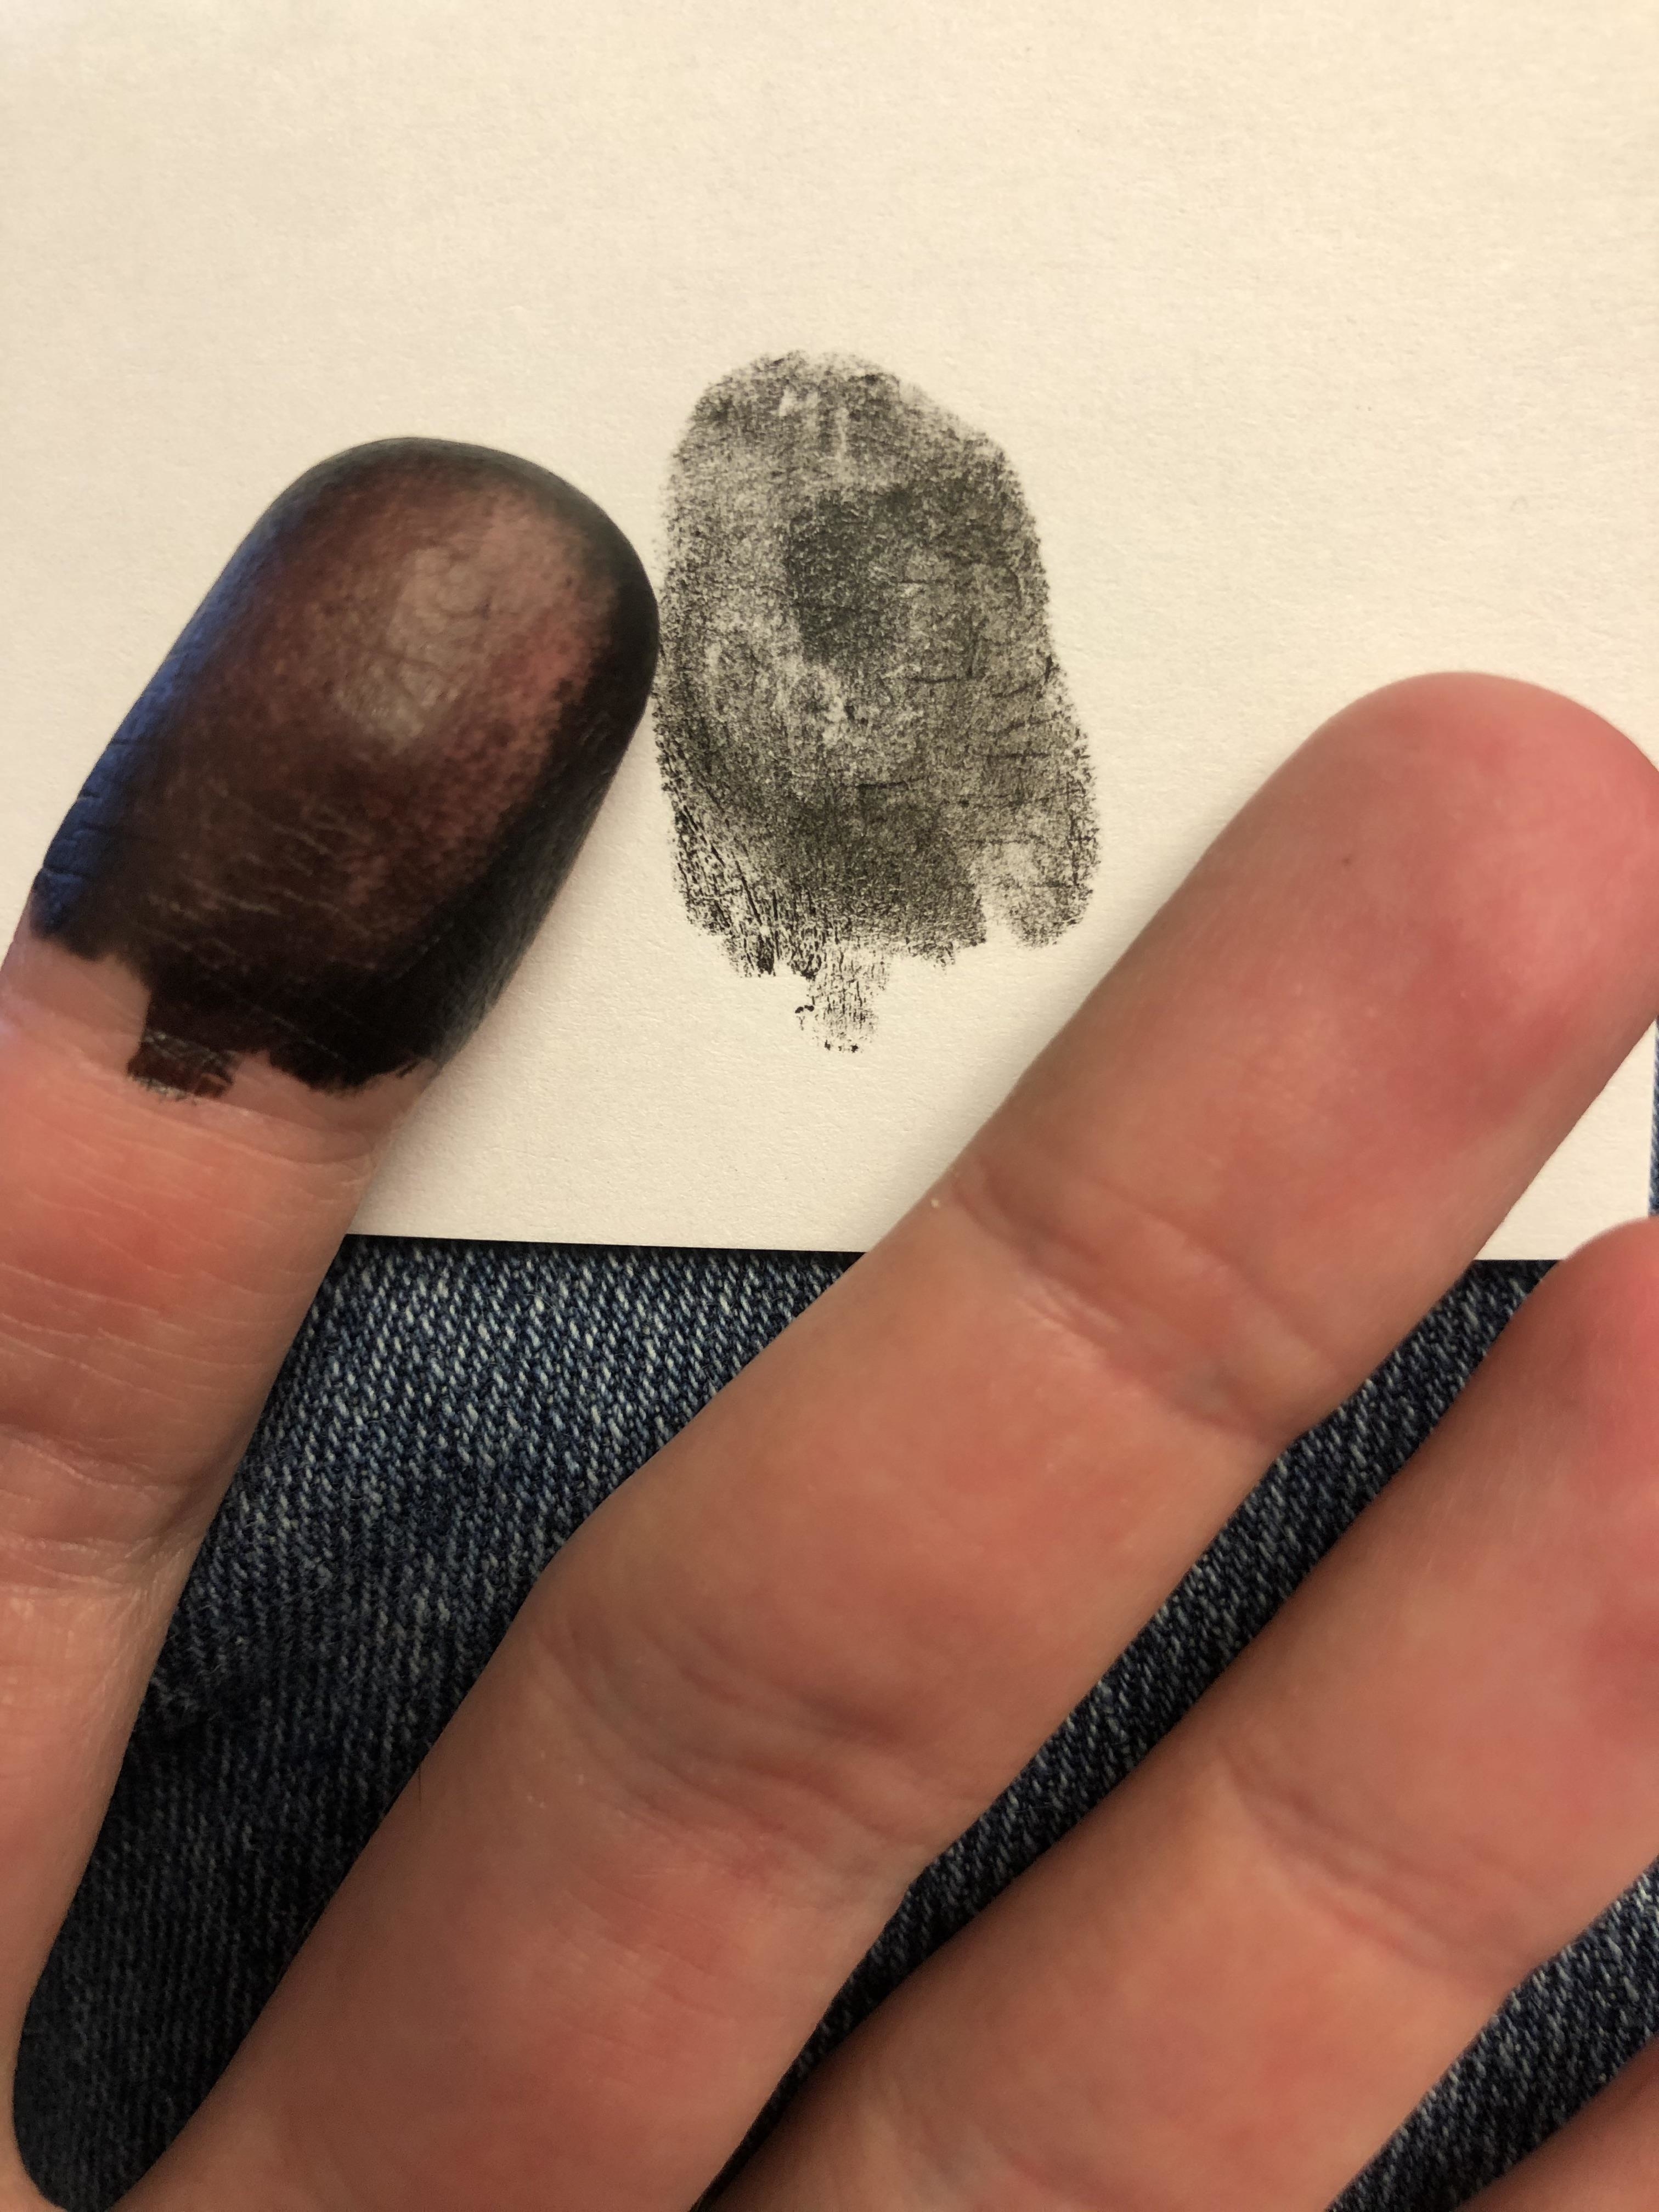 A hand with no fingerprints